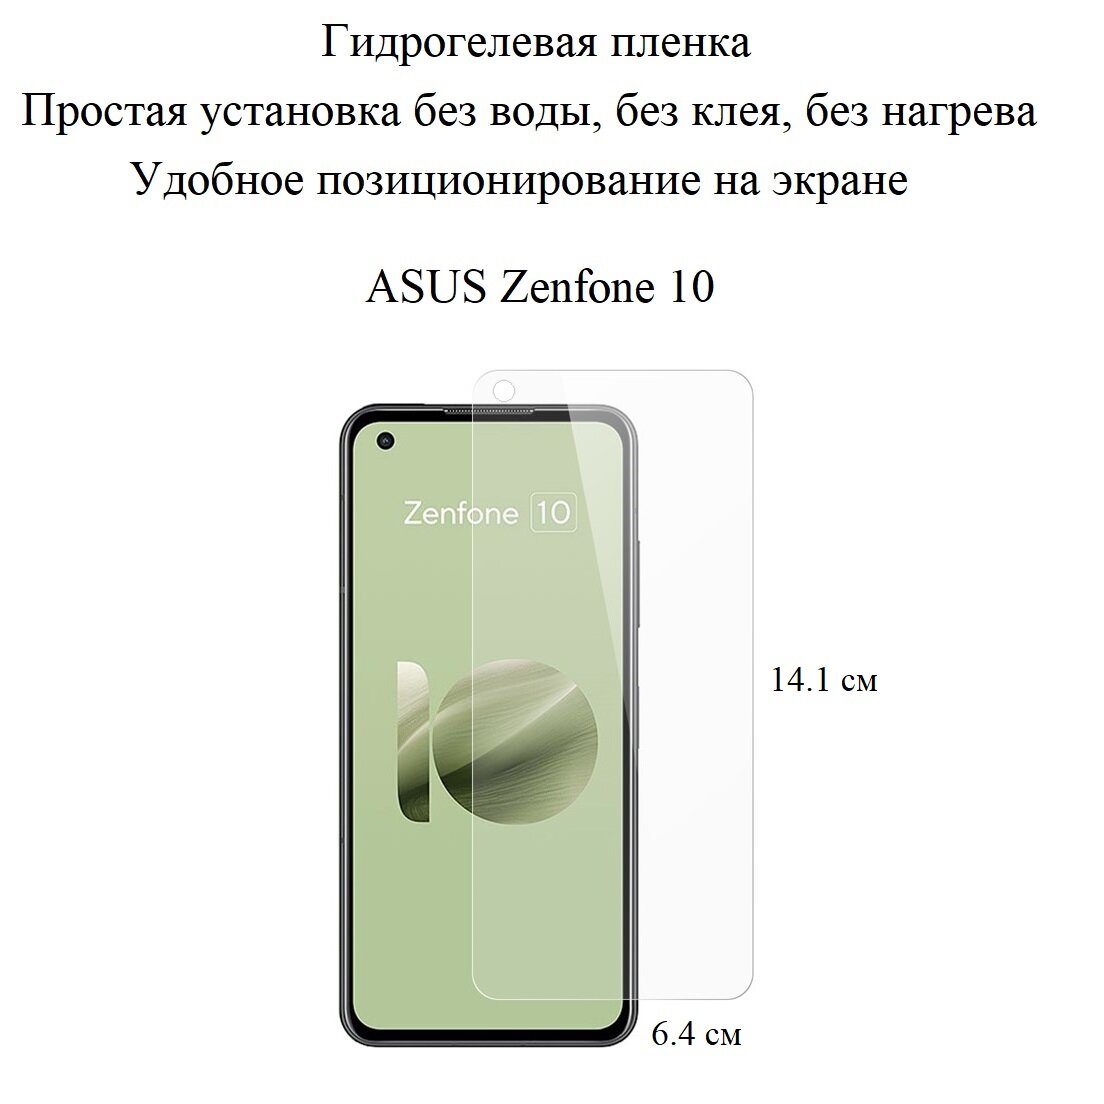 Глянцевая гидрогелевая пленка hoco. на экран смартфона Asus Zenfone 10